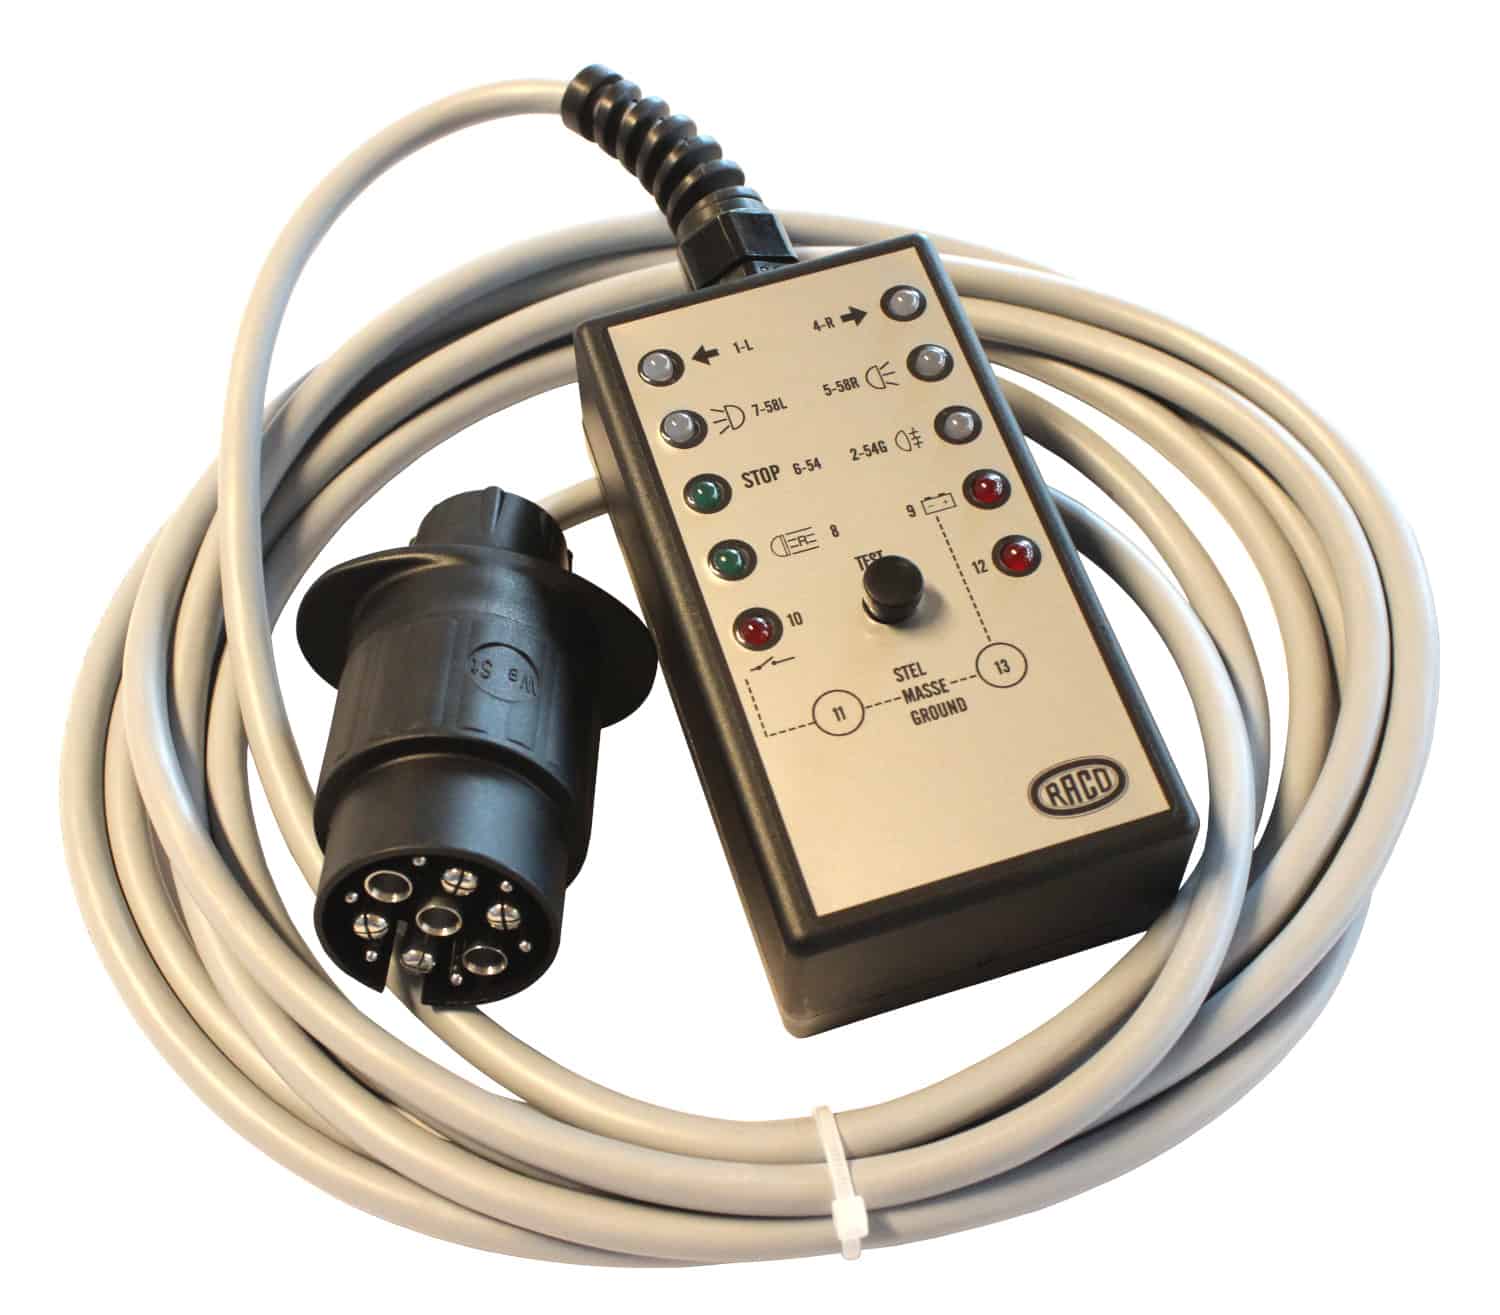 Testing unit towbar instrument GSE Trailer tester tool Connection testplug 12V car trailer car 13-pol Multicon WeSt 12775